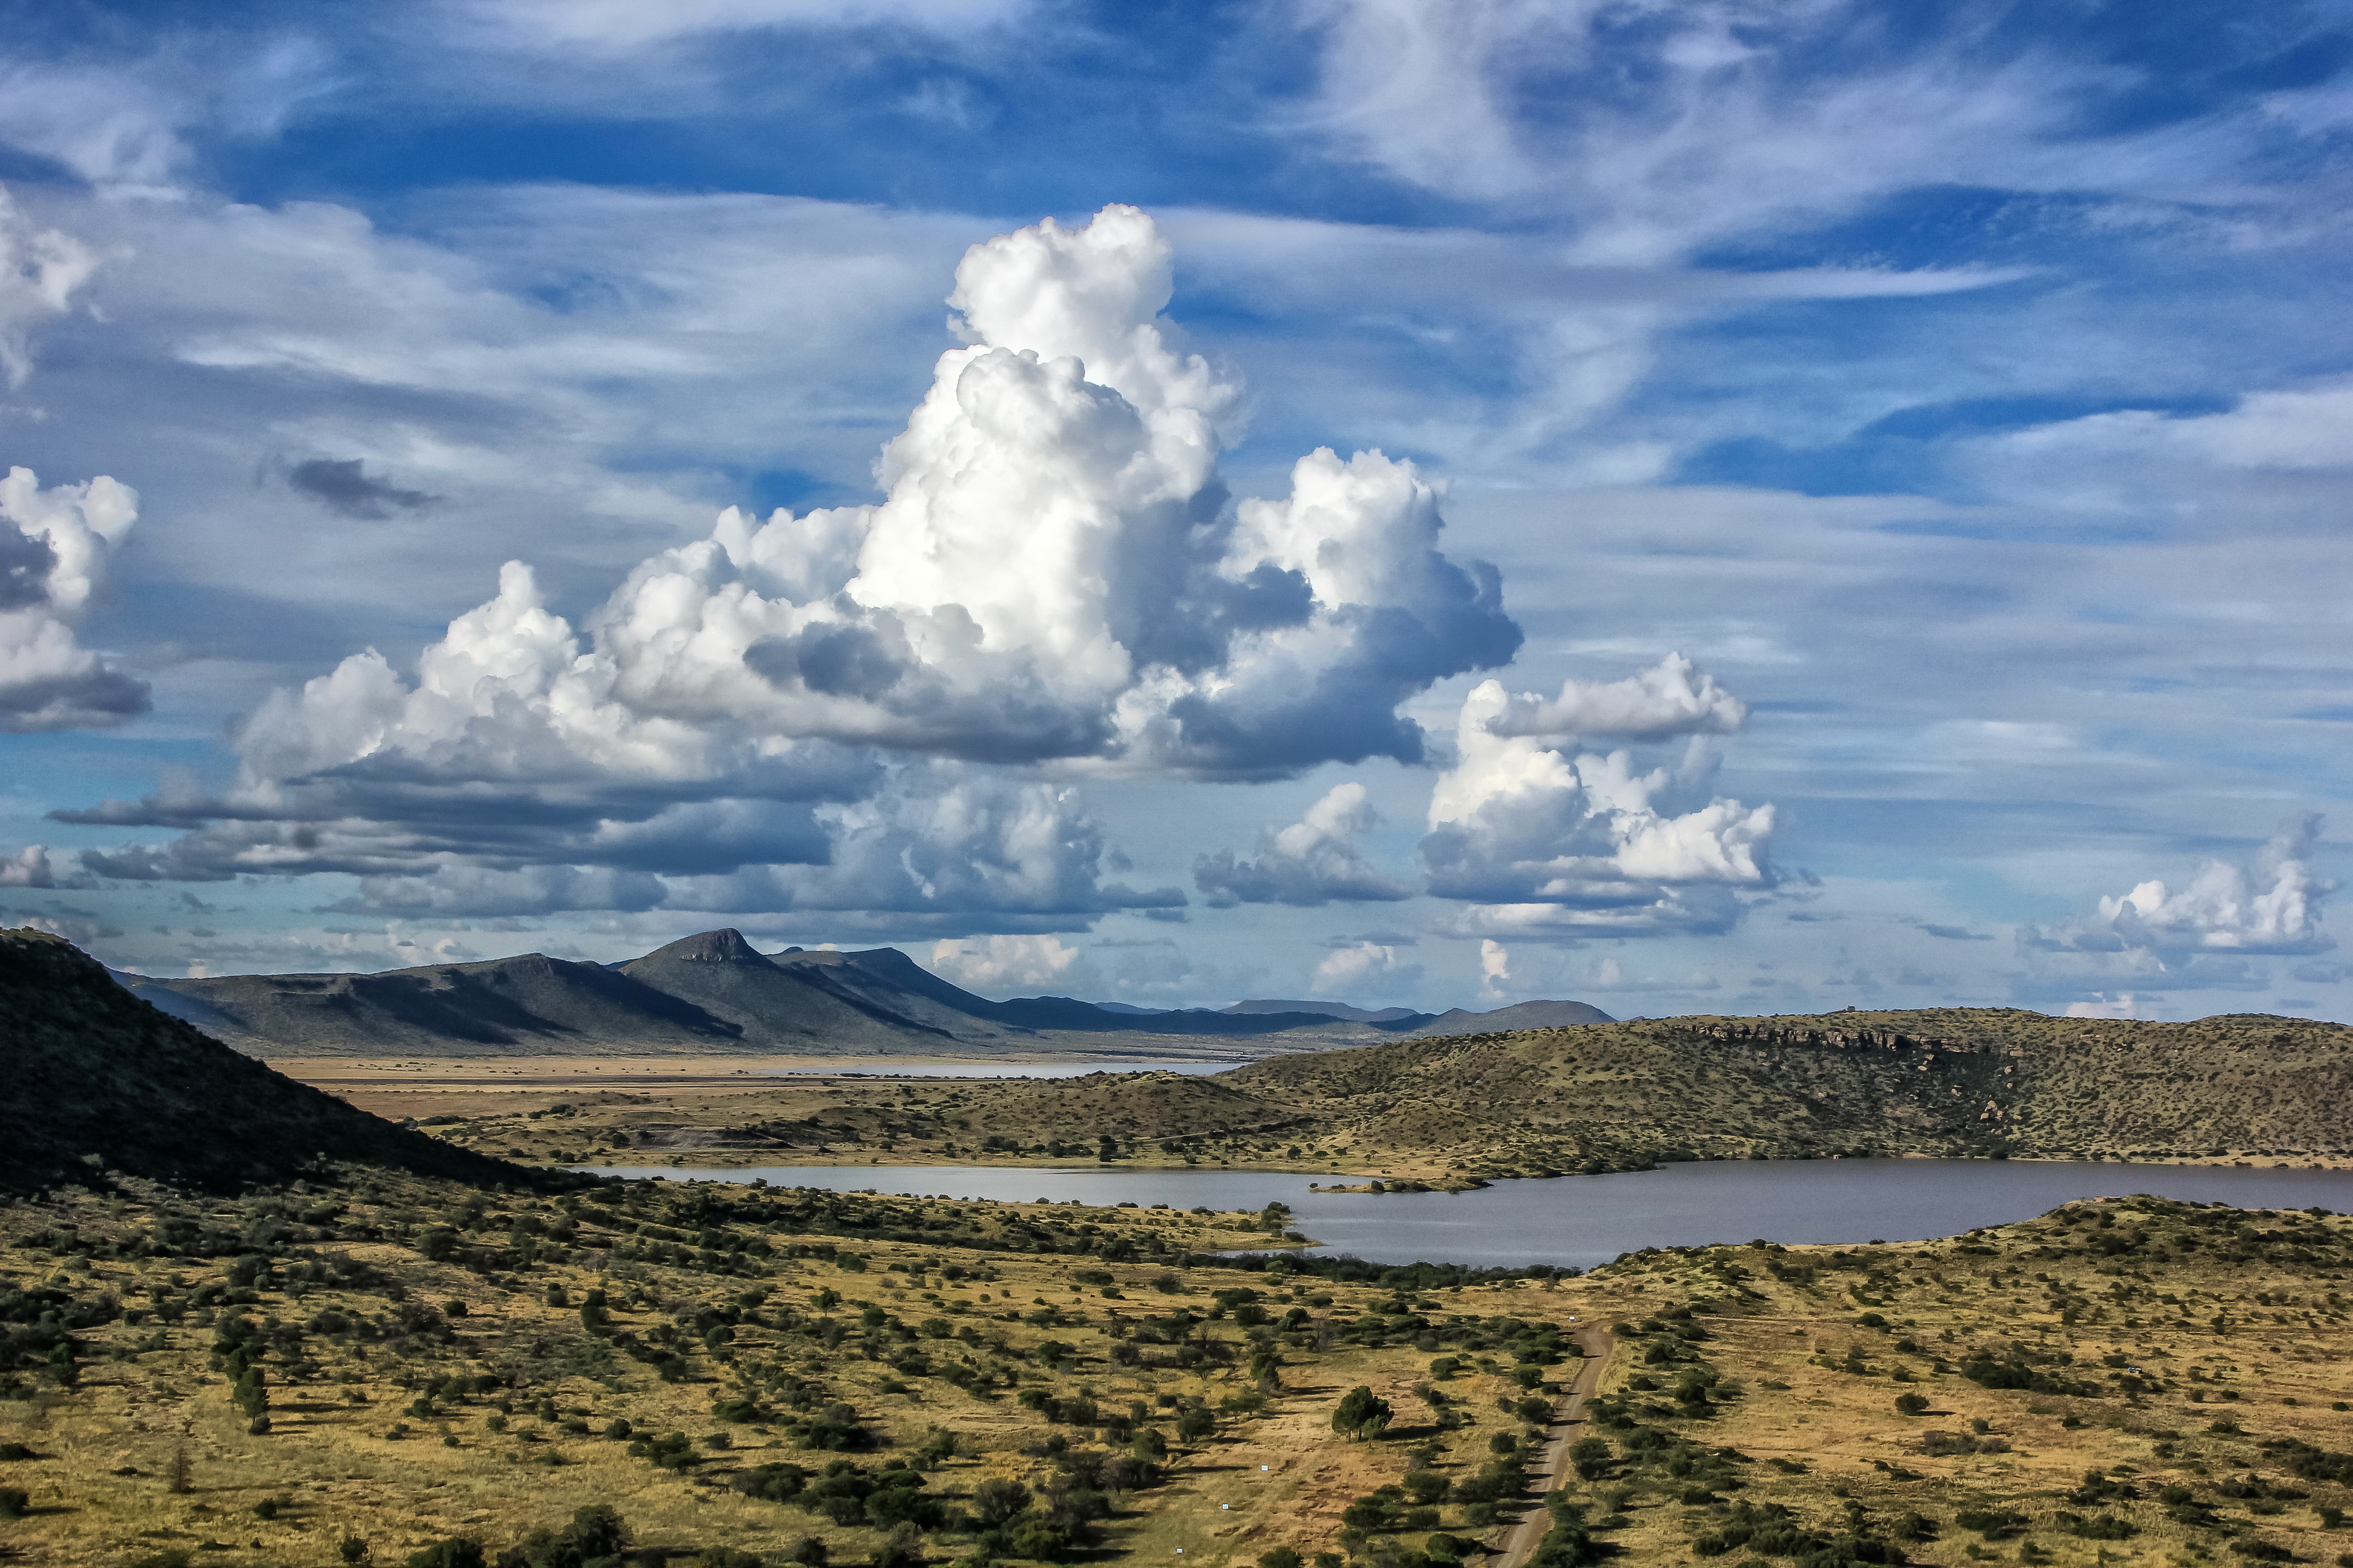 Splendid skies above the Gariep Dam, which sprawls over 370 square kilometres. Image: Chris Marais